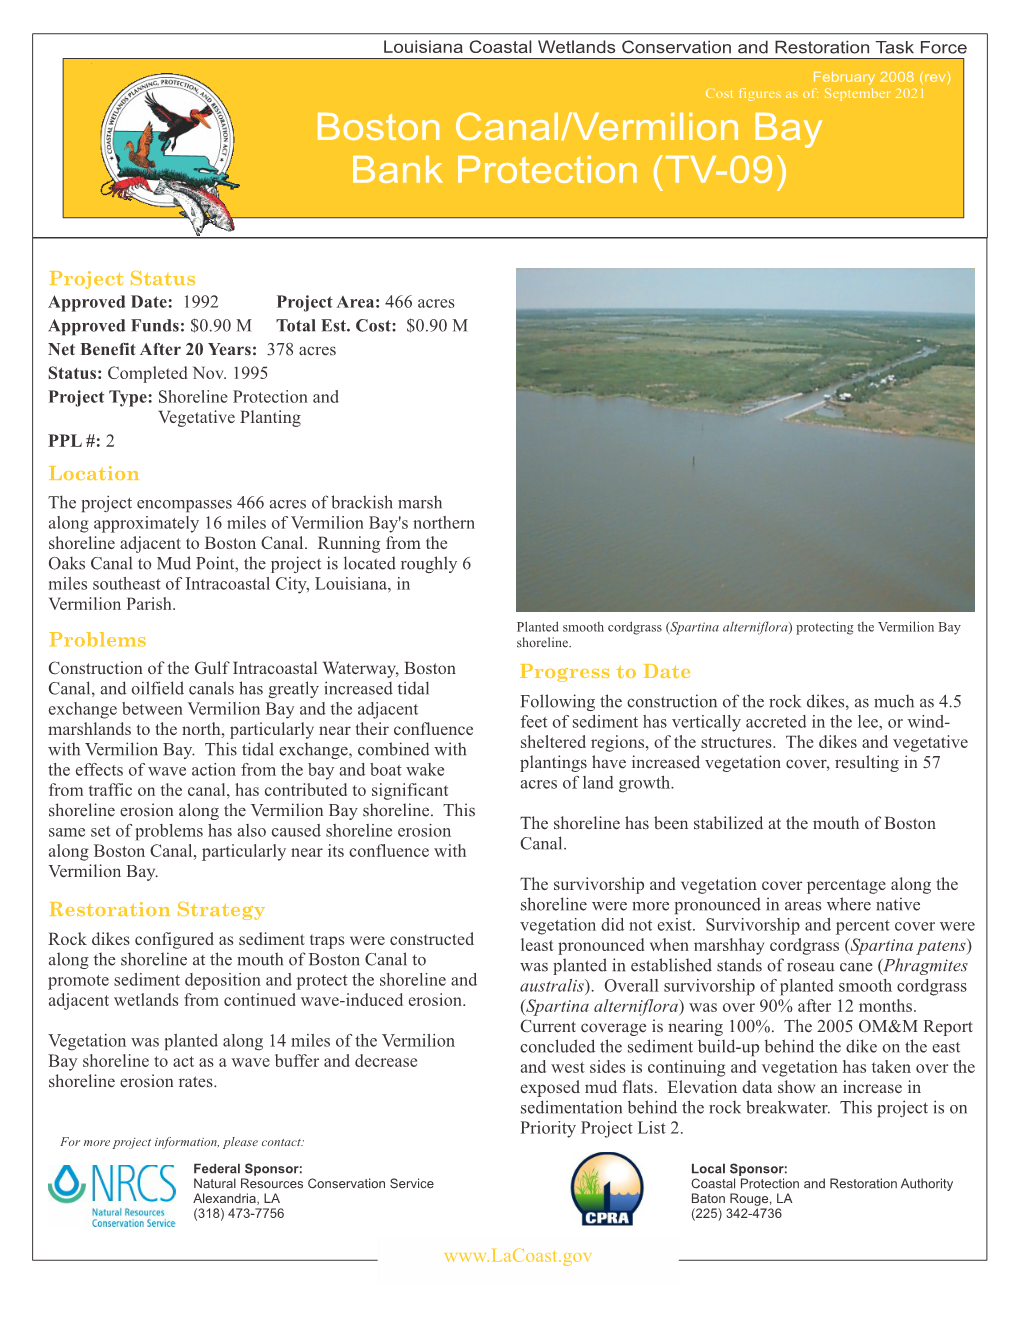 TV 09 Boston Canal Vermilion Bay Bank Protection Prep.Cdr